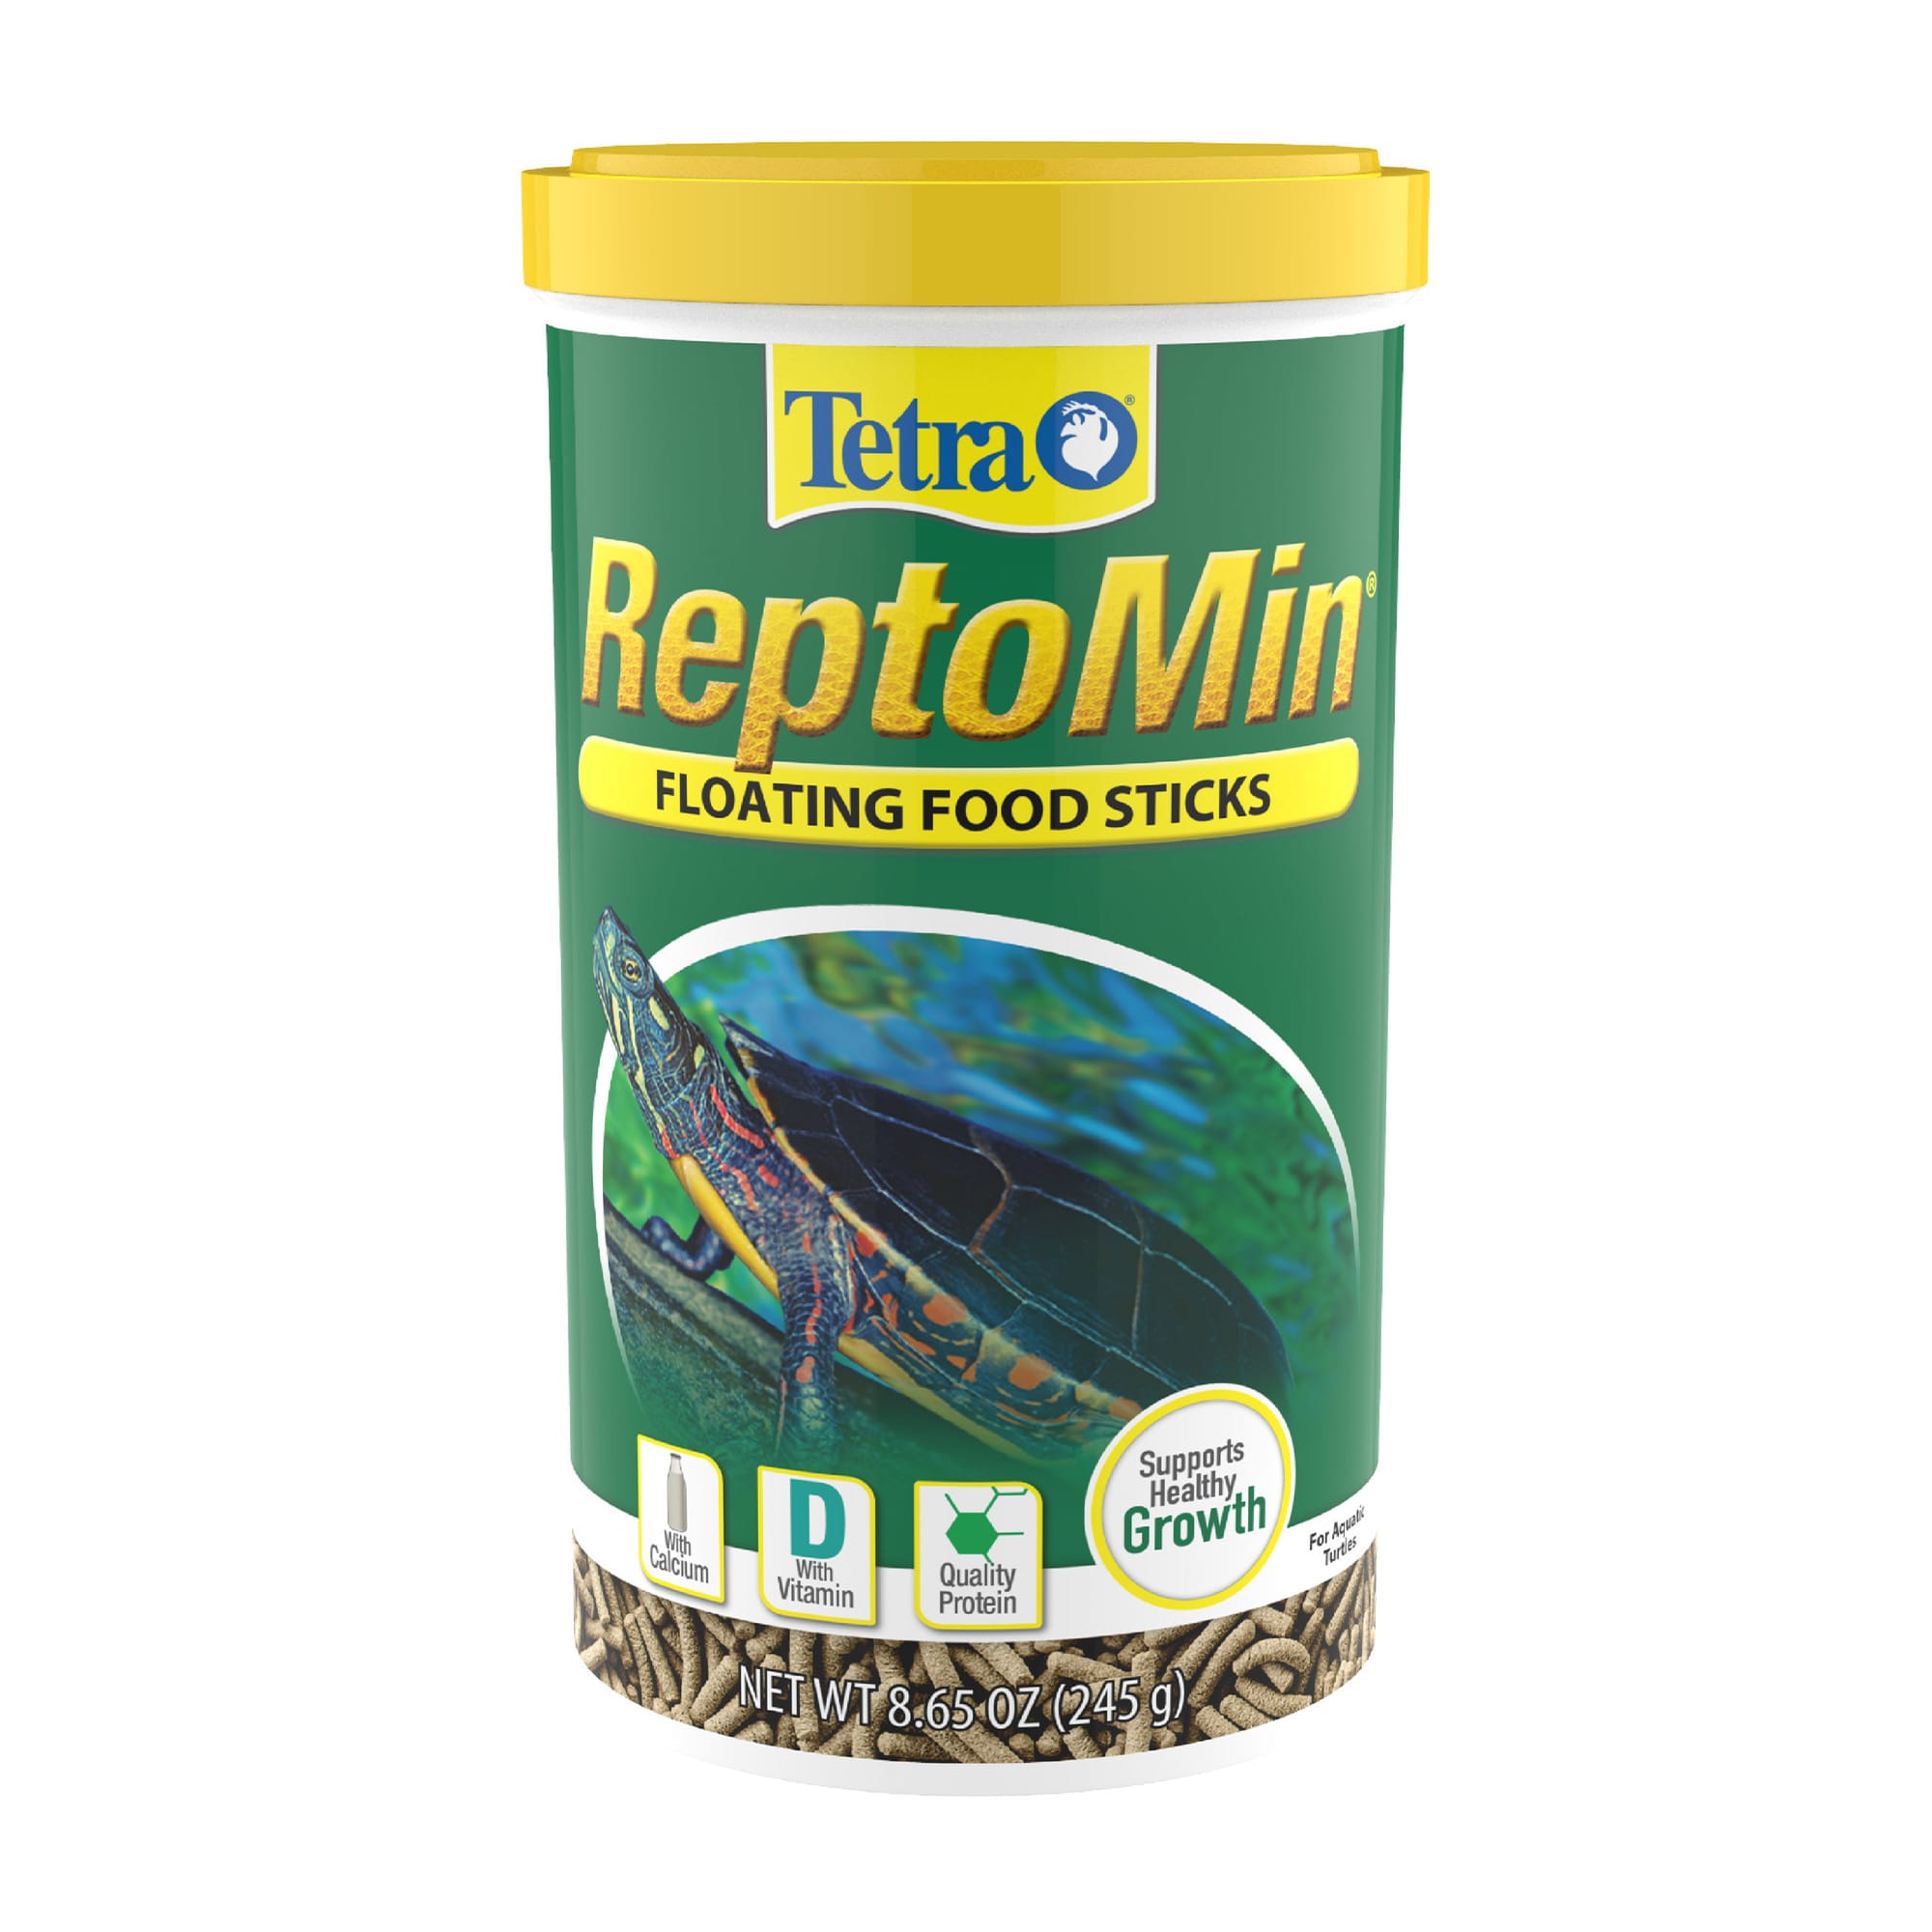 Tetra Reptomin Floating Food Sticks Turtle Food - 10.59 Oz